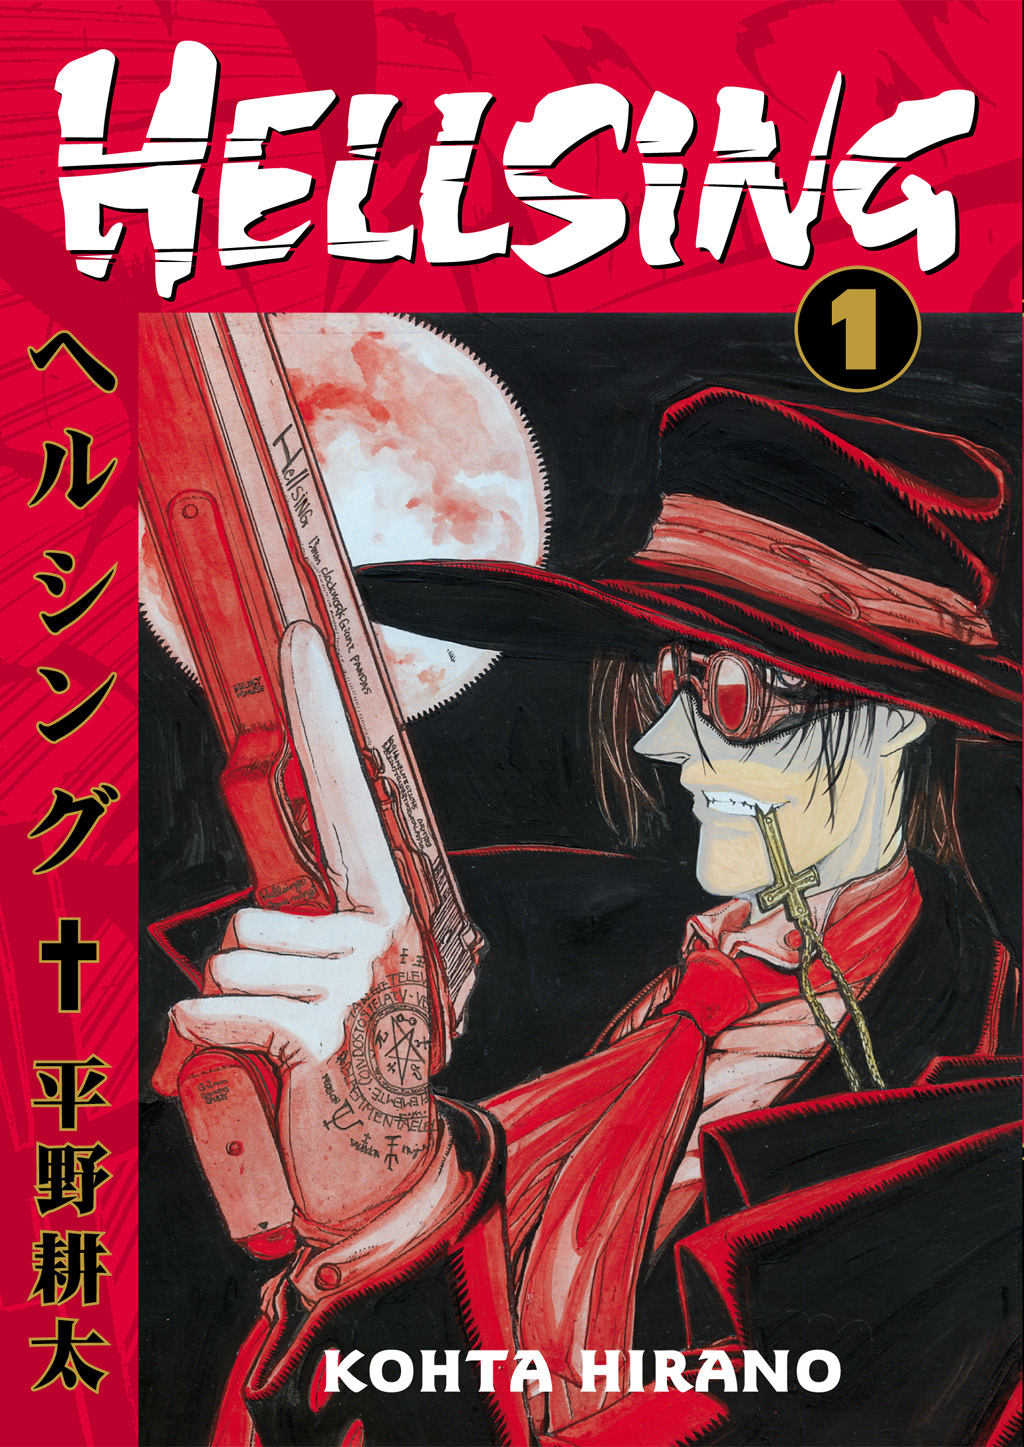 Alucard smiles on Kohta Hirano's cover to Hellsing Volume 1 (1998), Shōnen Gahōsha